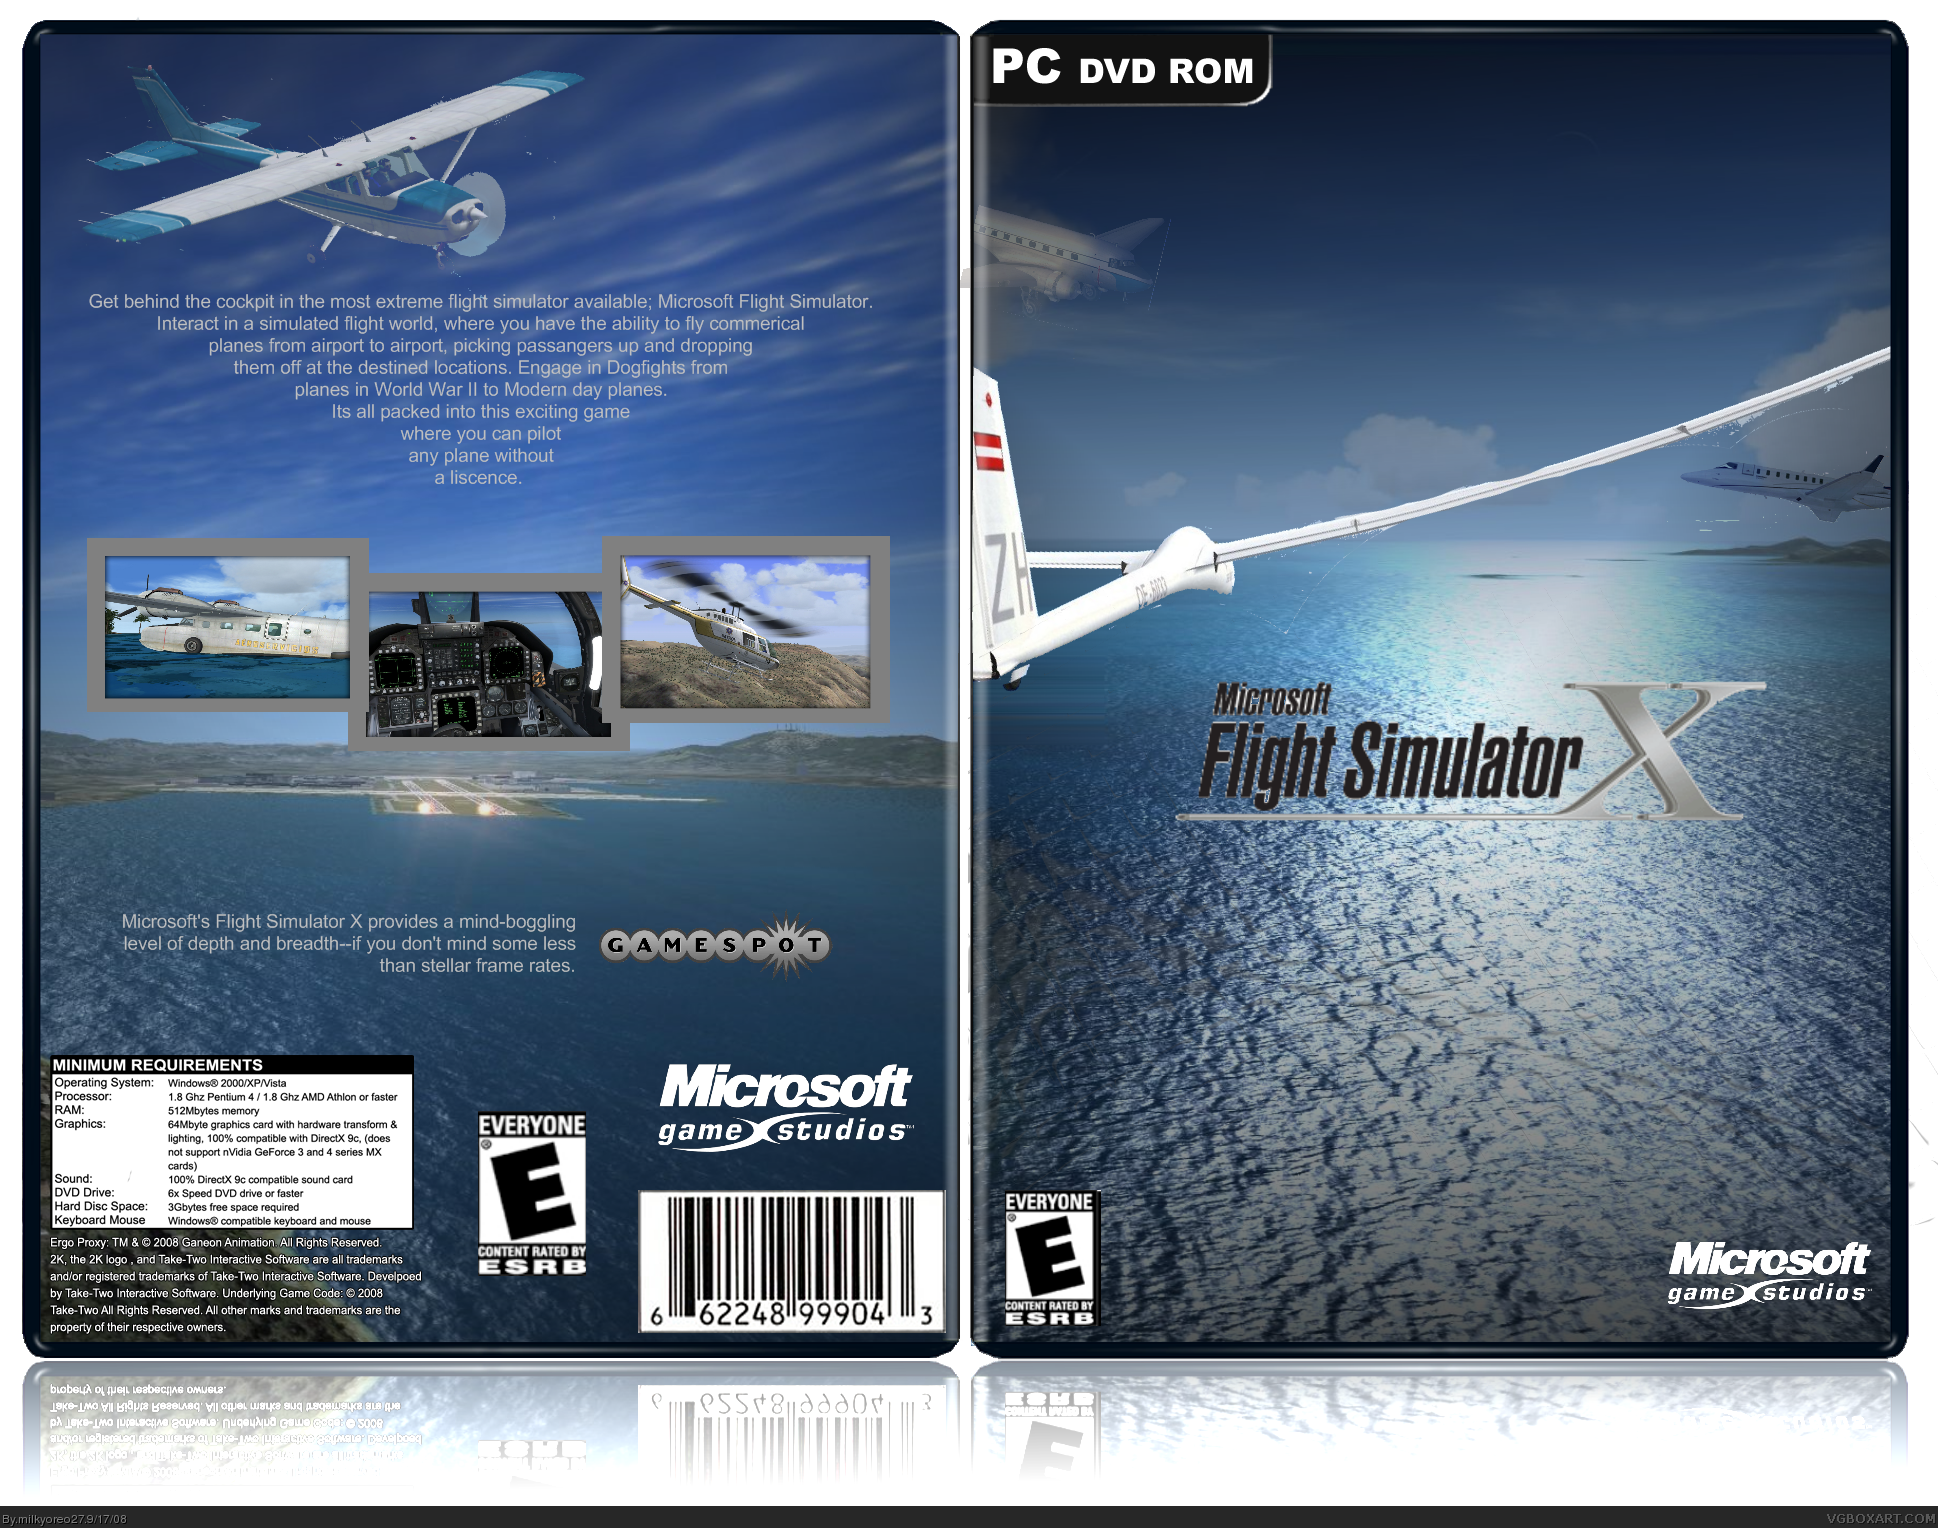 microsoft flight simulator x product key generator